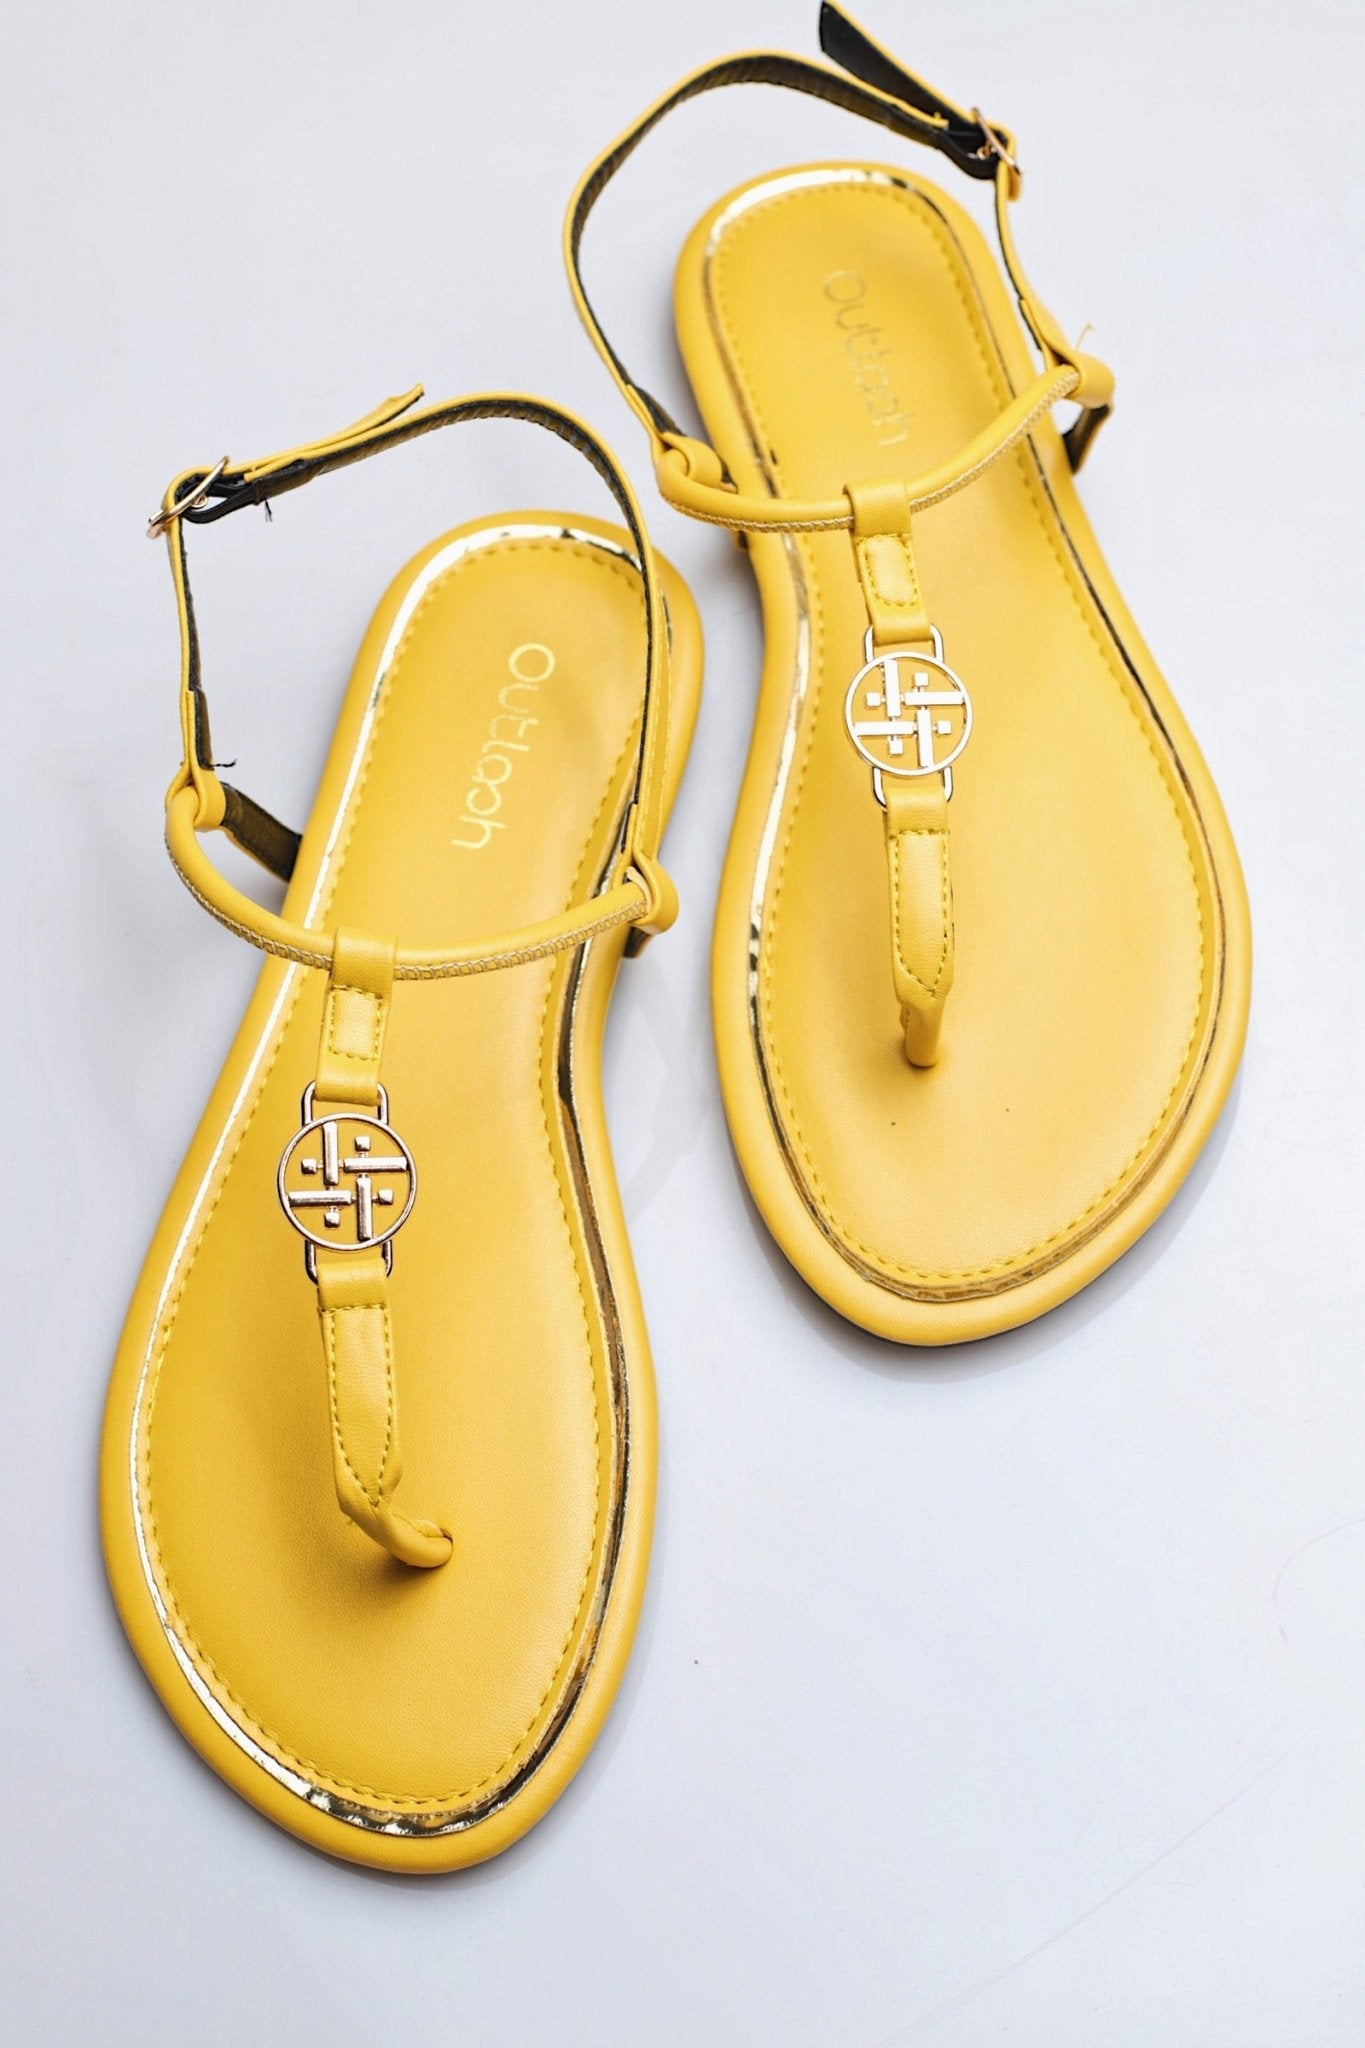 Sandals - Outlash brand